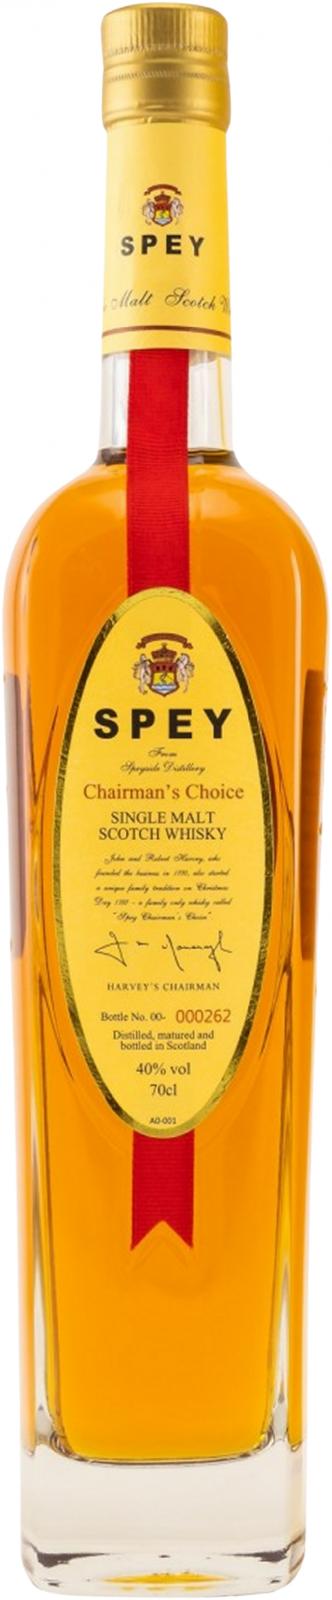 SPEY Chairman's Choice